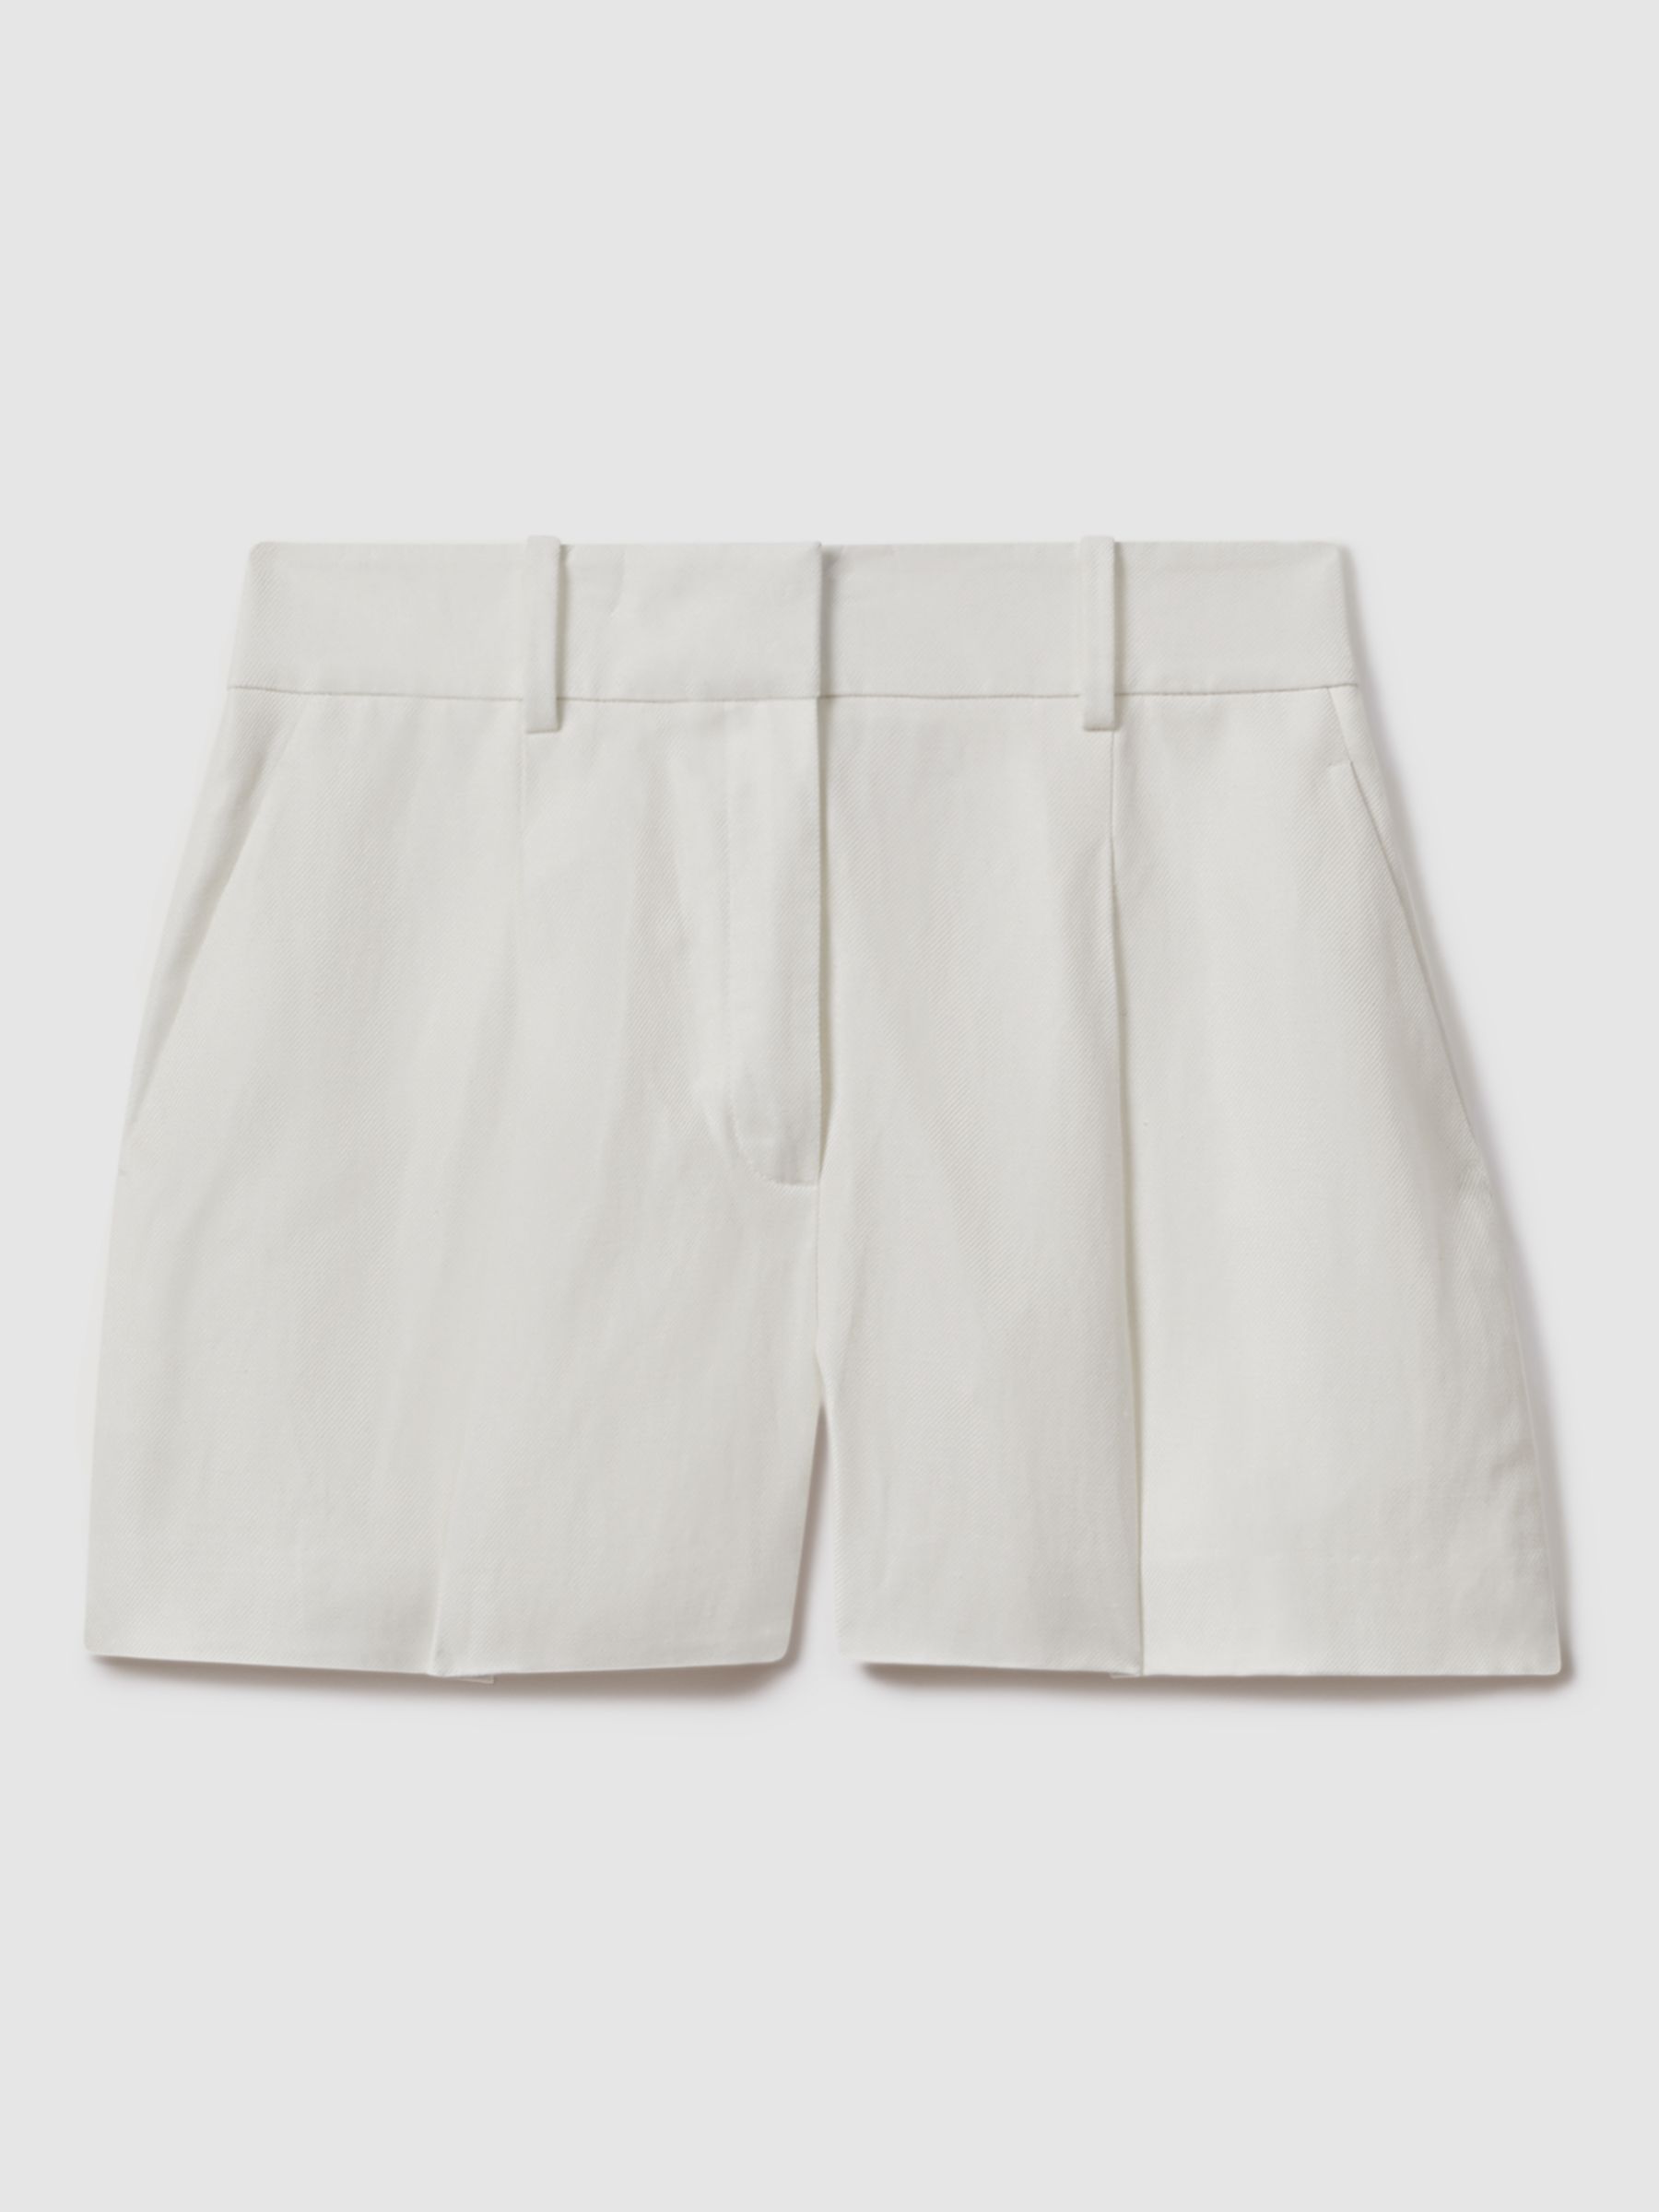 Reiss Lori Linen Blend Tailored Shorts, White, 6